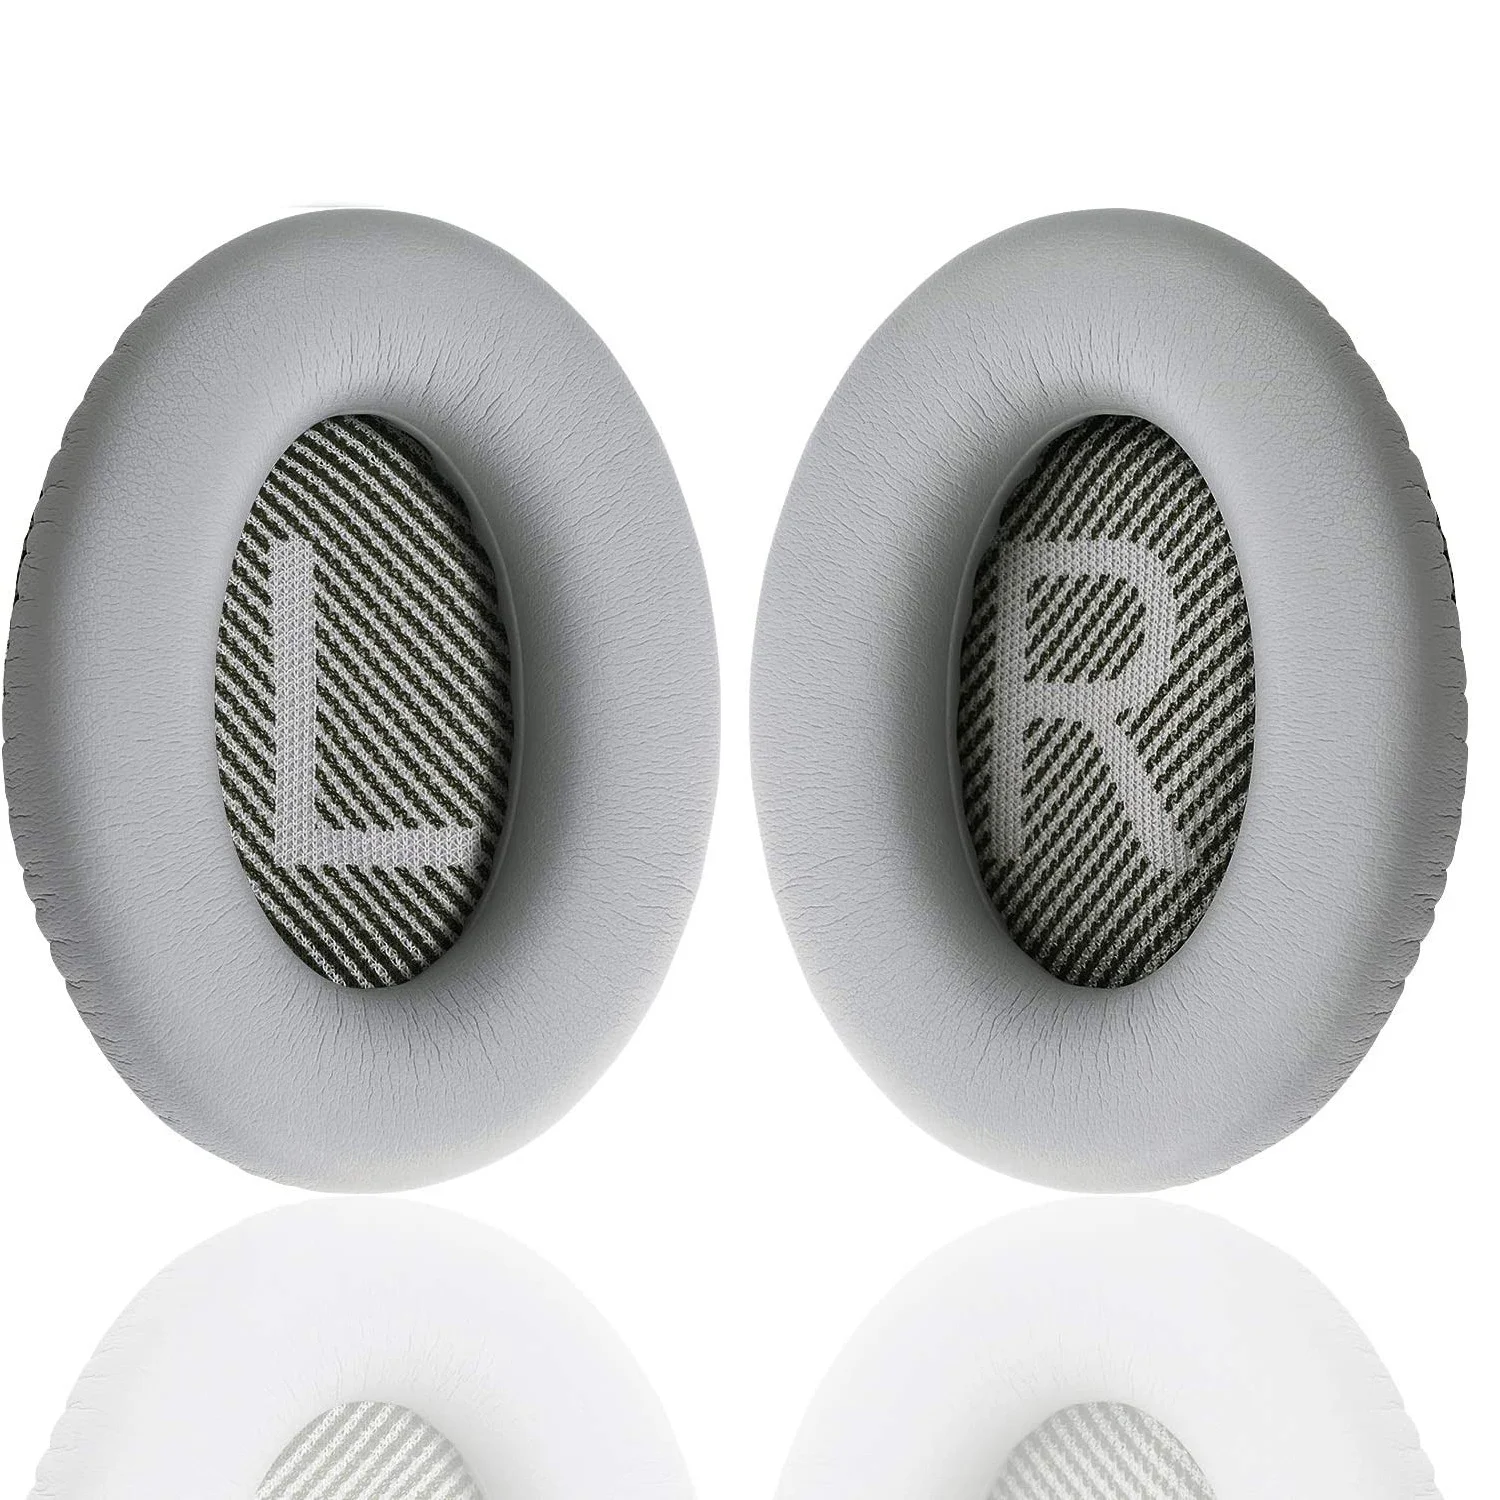 MMOBIEL Ear Pads Cushions Earpad Compatible with Bose QuietComfort Headset QC2 QC15 QC25 QC35 AE2 AE2i AE2 AE2-W Black